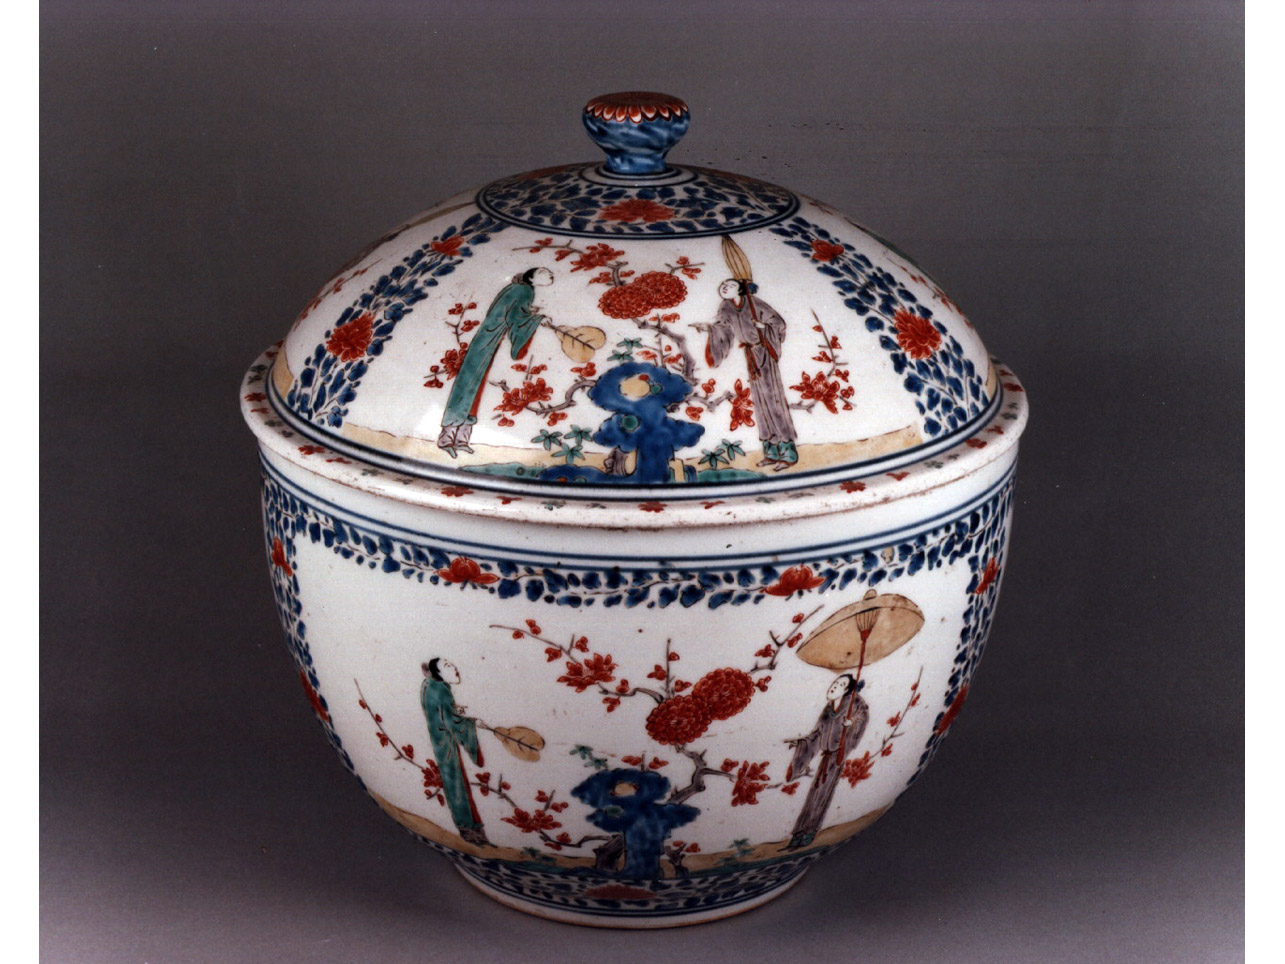 motivi decorativi floreali (vaso) - manifattura di Arita (sec. XVII)